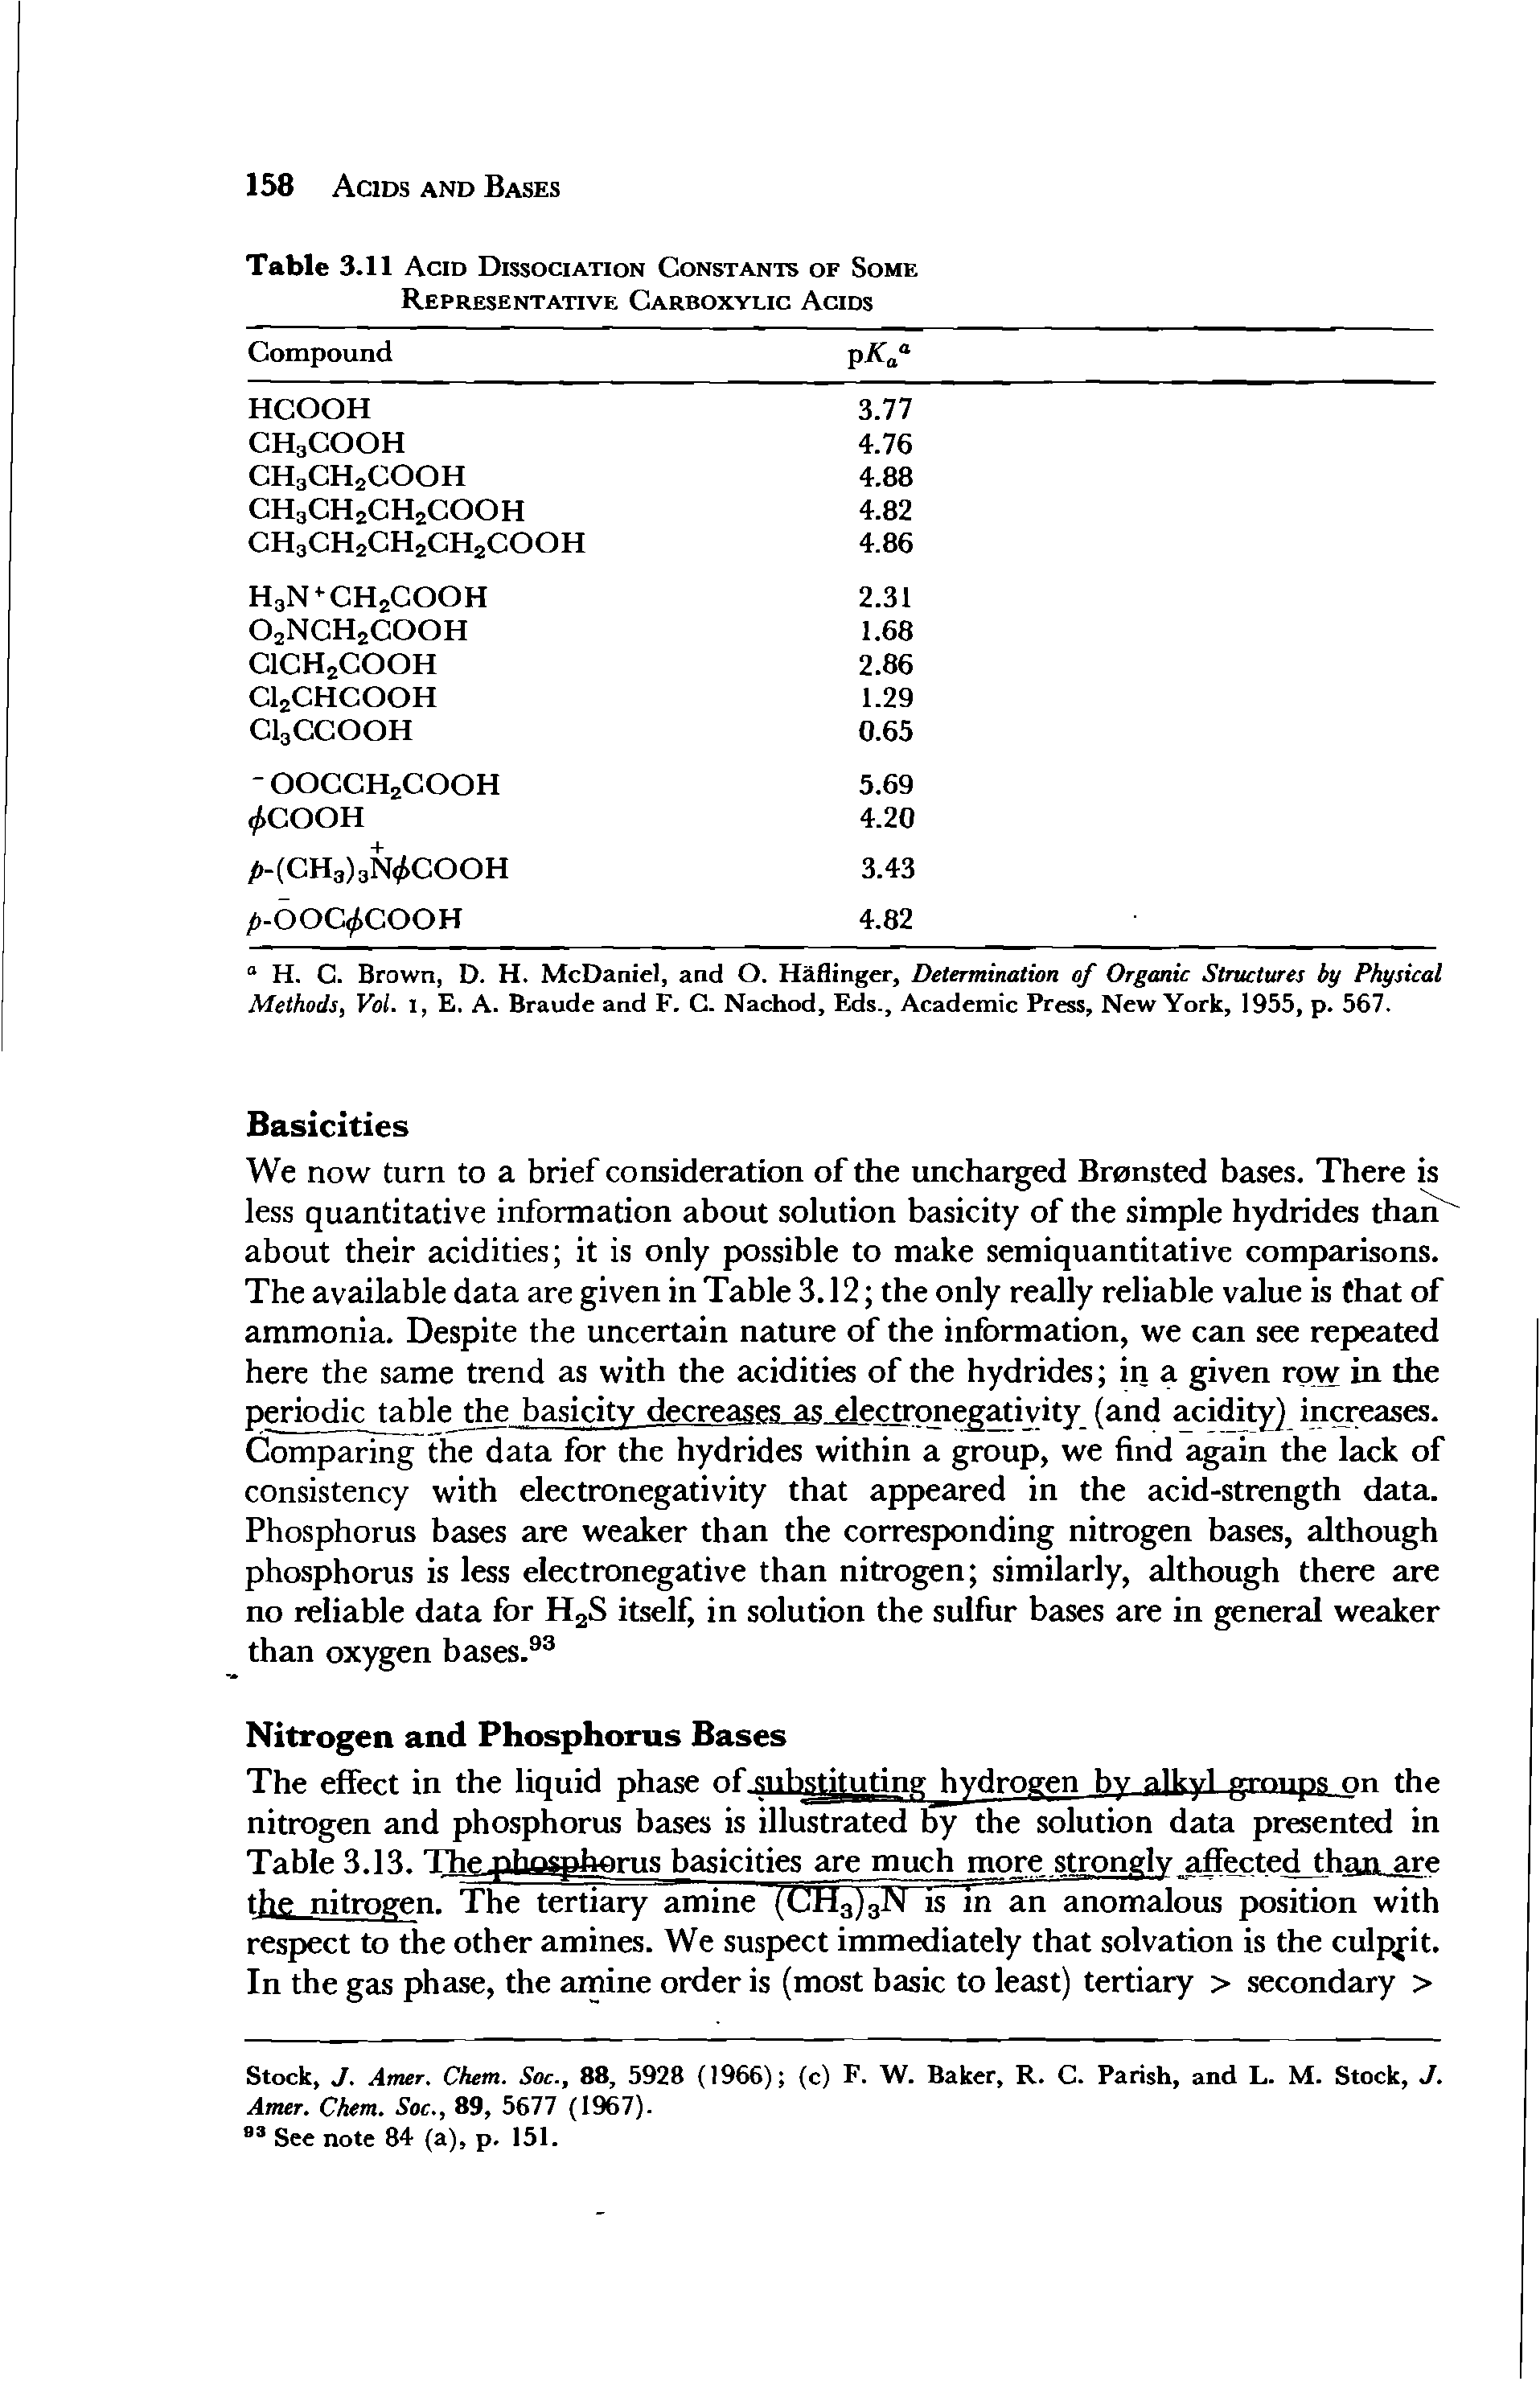 Table 3.11 Acid Dissociation Constants of Some Representative Carboxylic Acids...